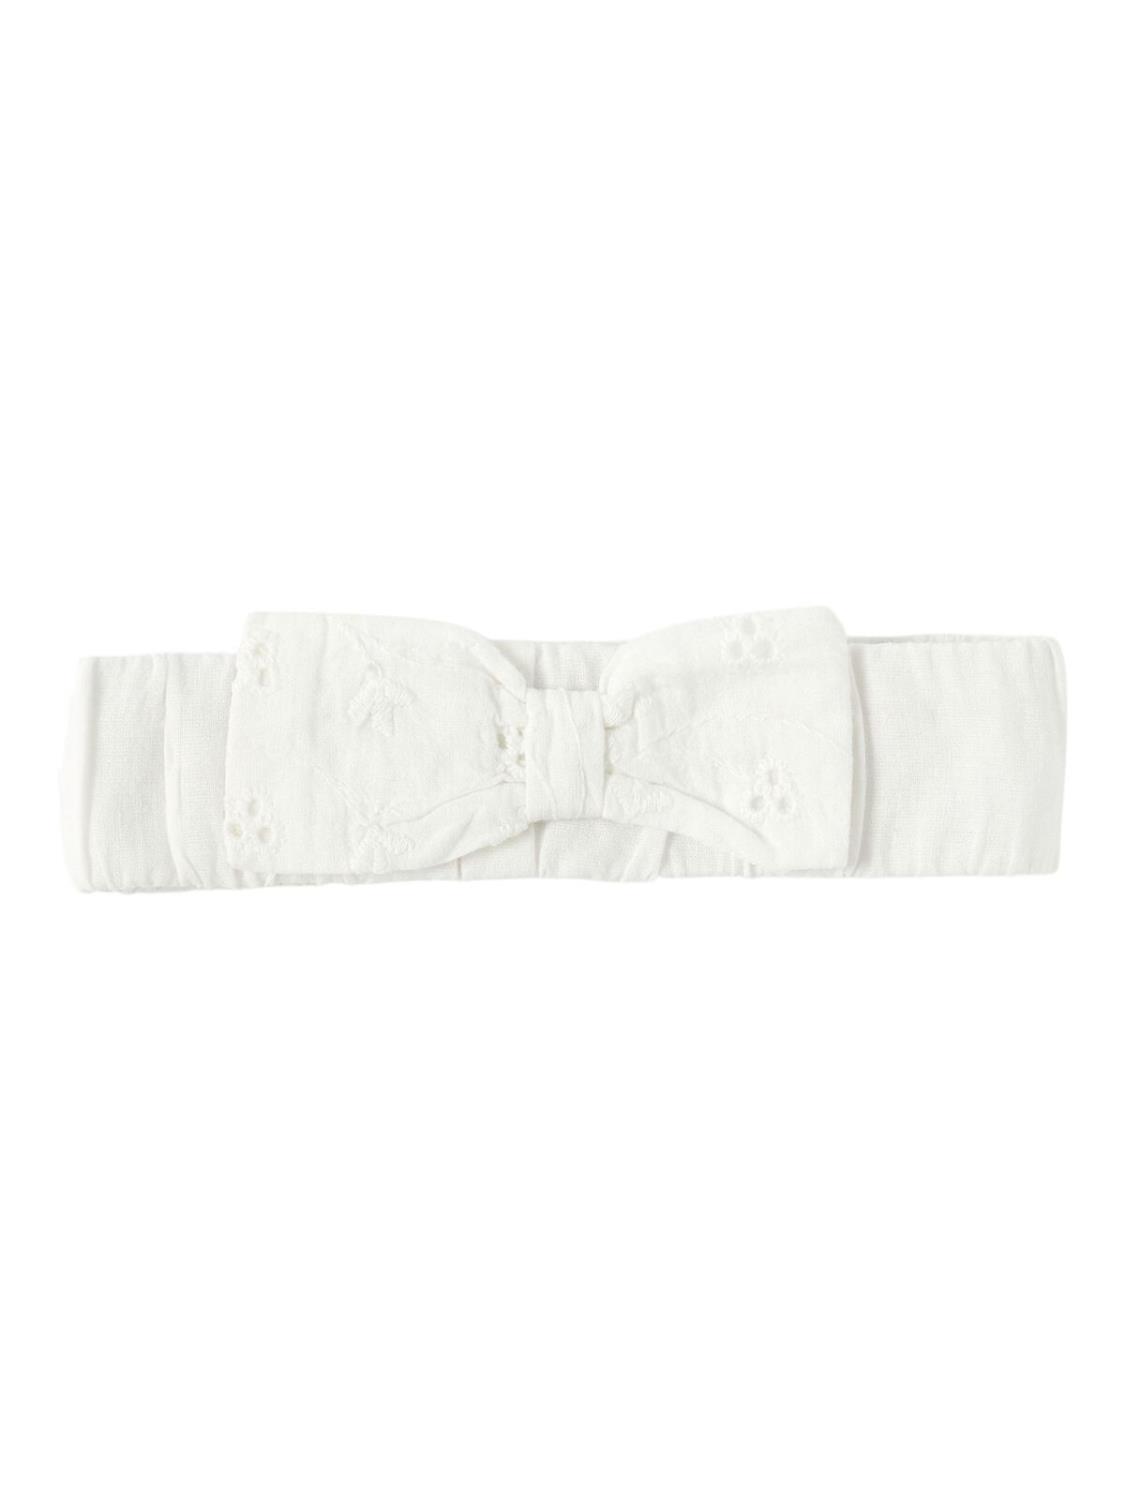 Della Headband, Baby - White Alyssum